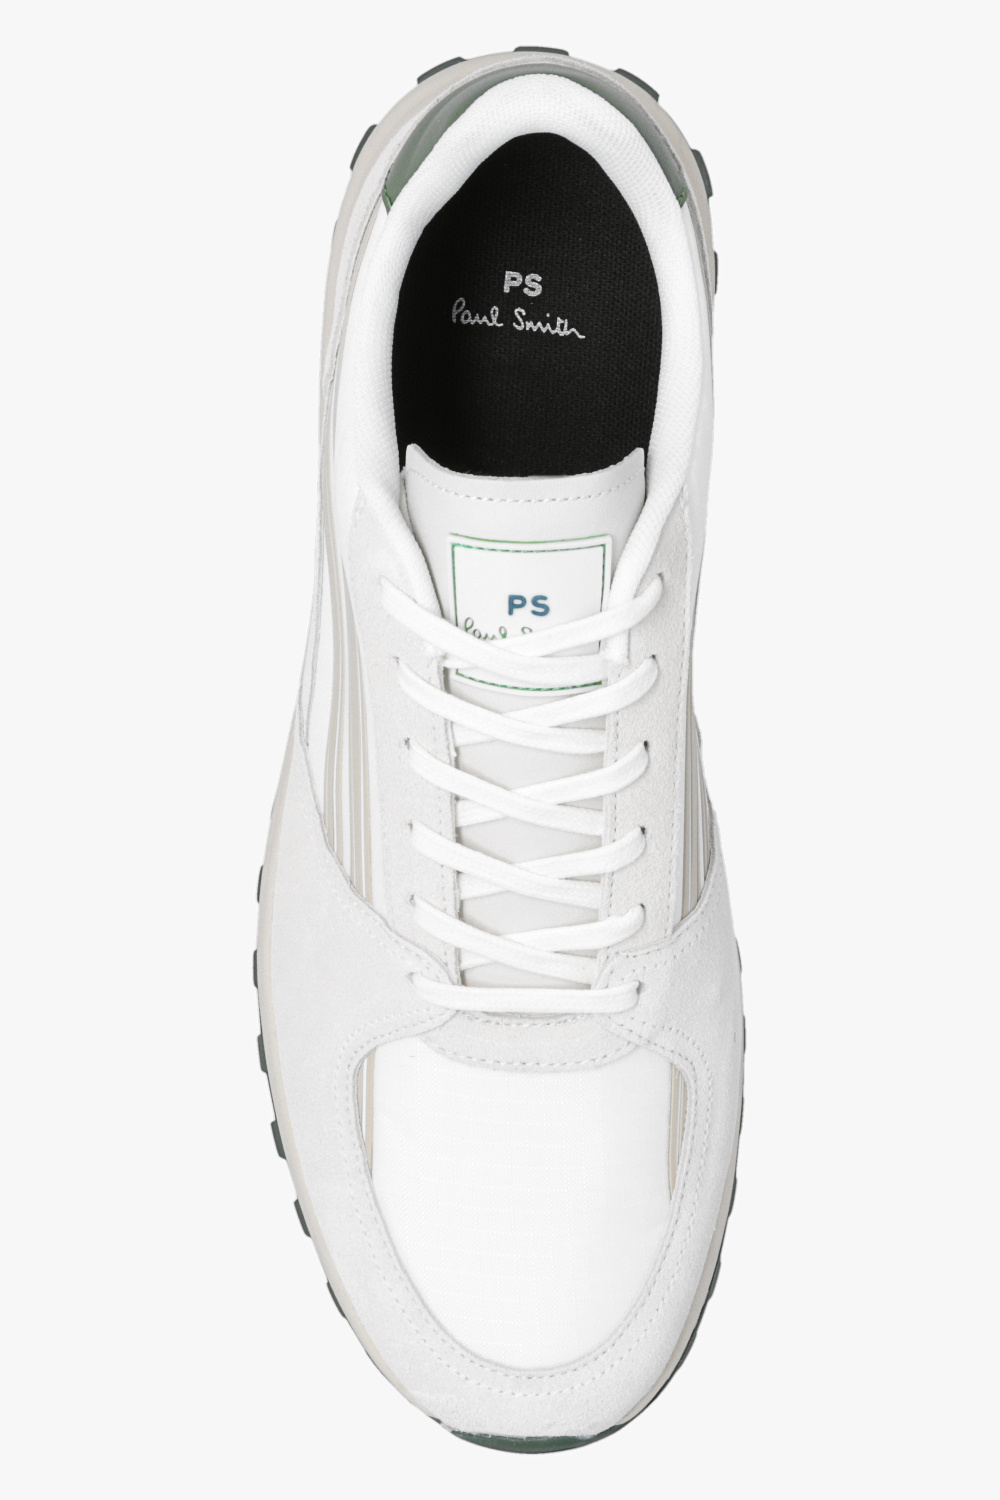 PS Paul Smith ‘Damon’ sneakers